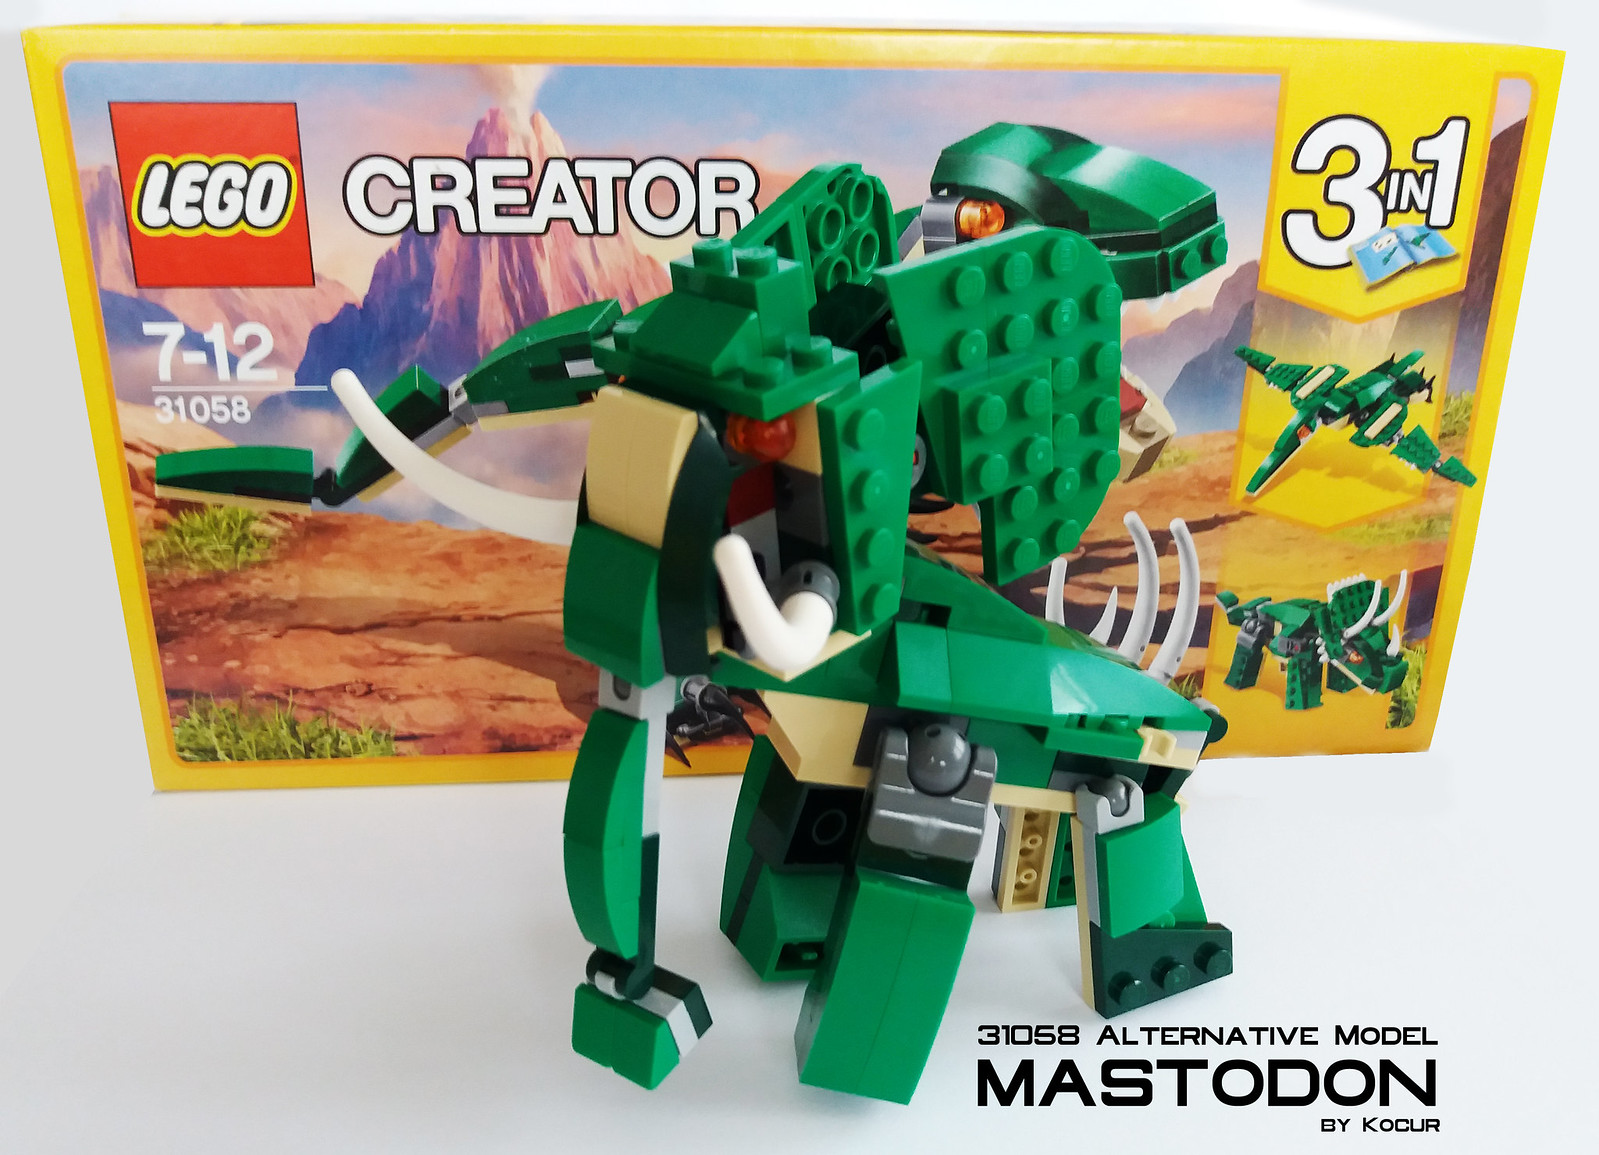 31058 Alternative Model – Mastodon